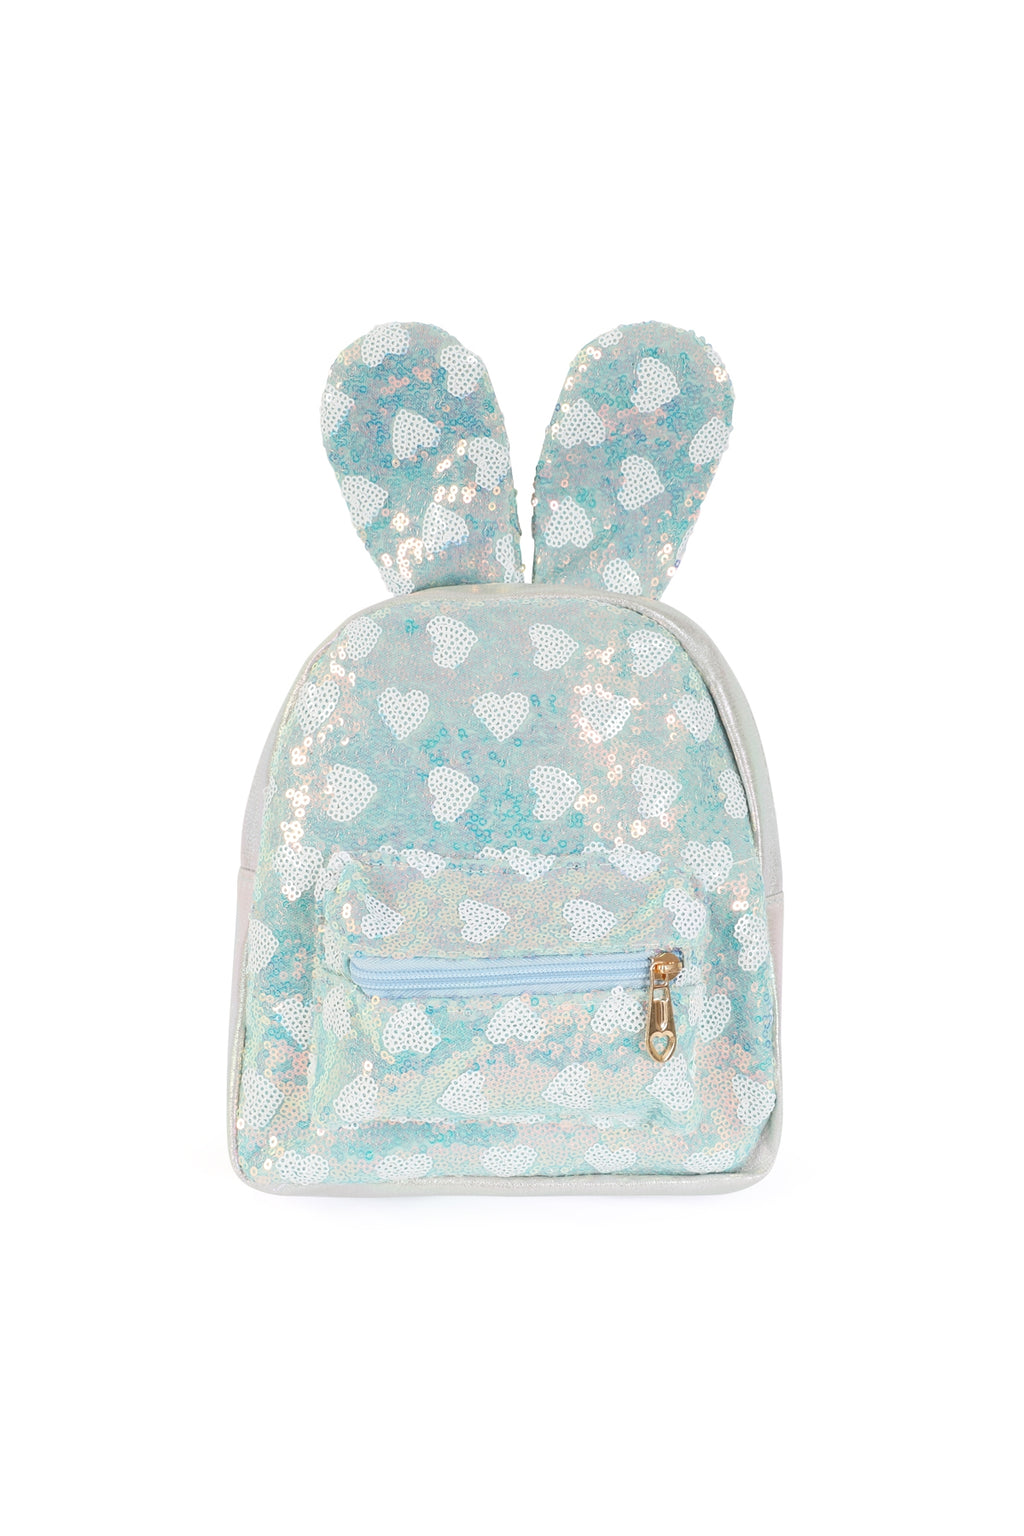 Cute Bunny Ears Glitters Kids Backpack Blue - Pack of 6